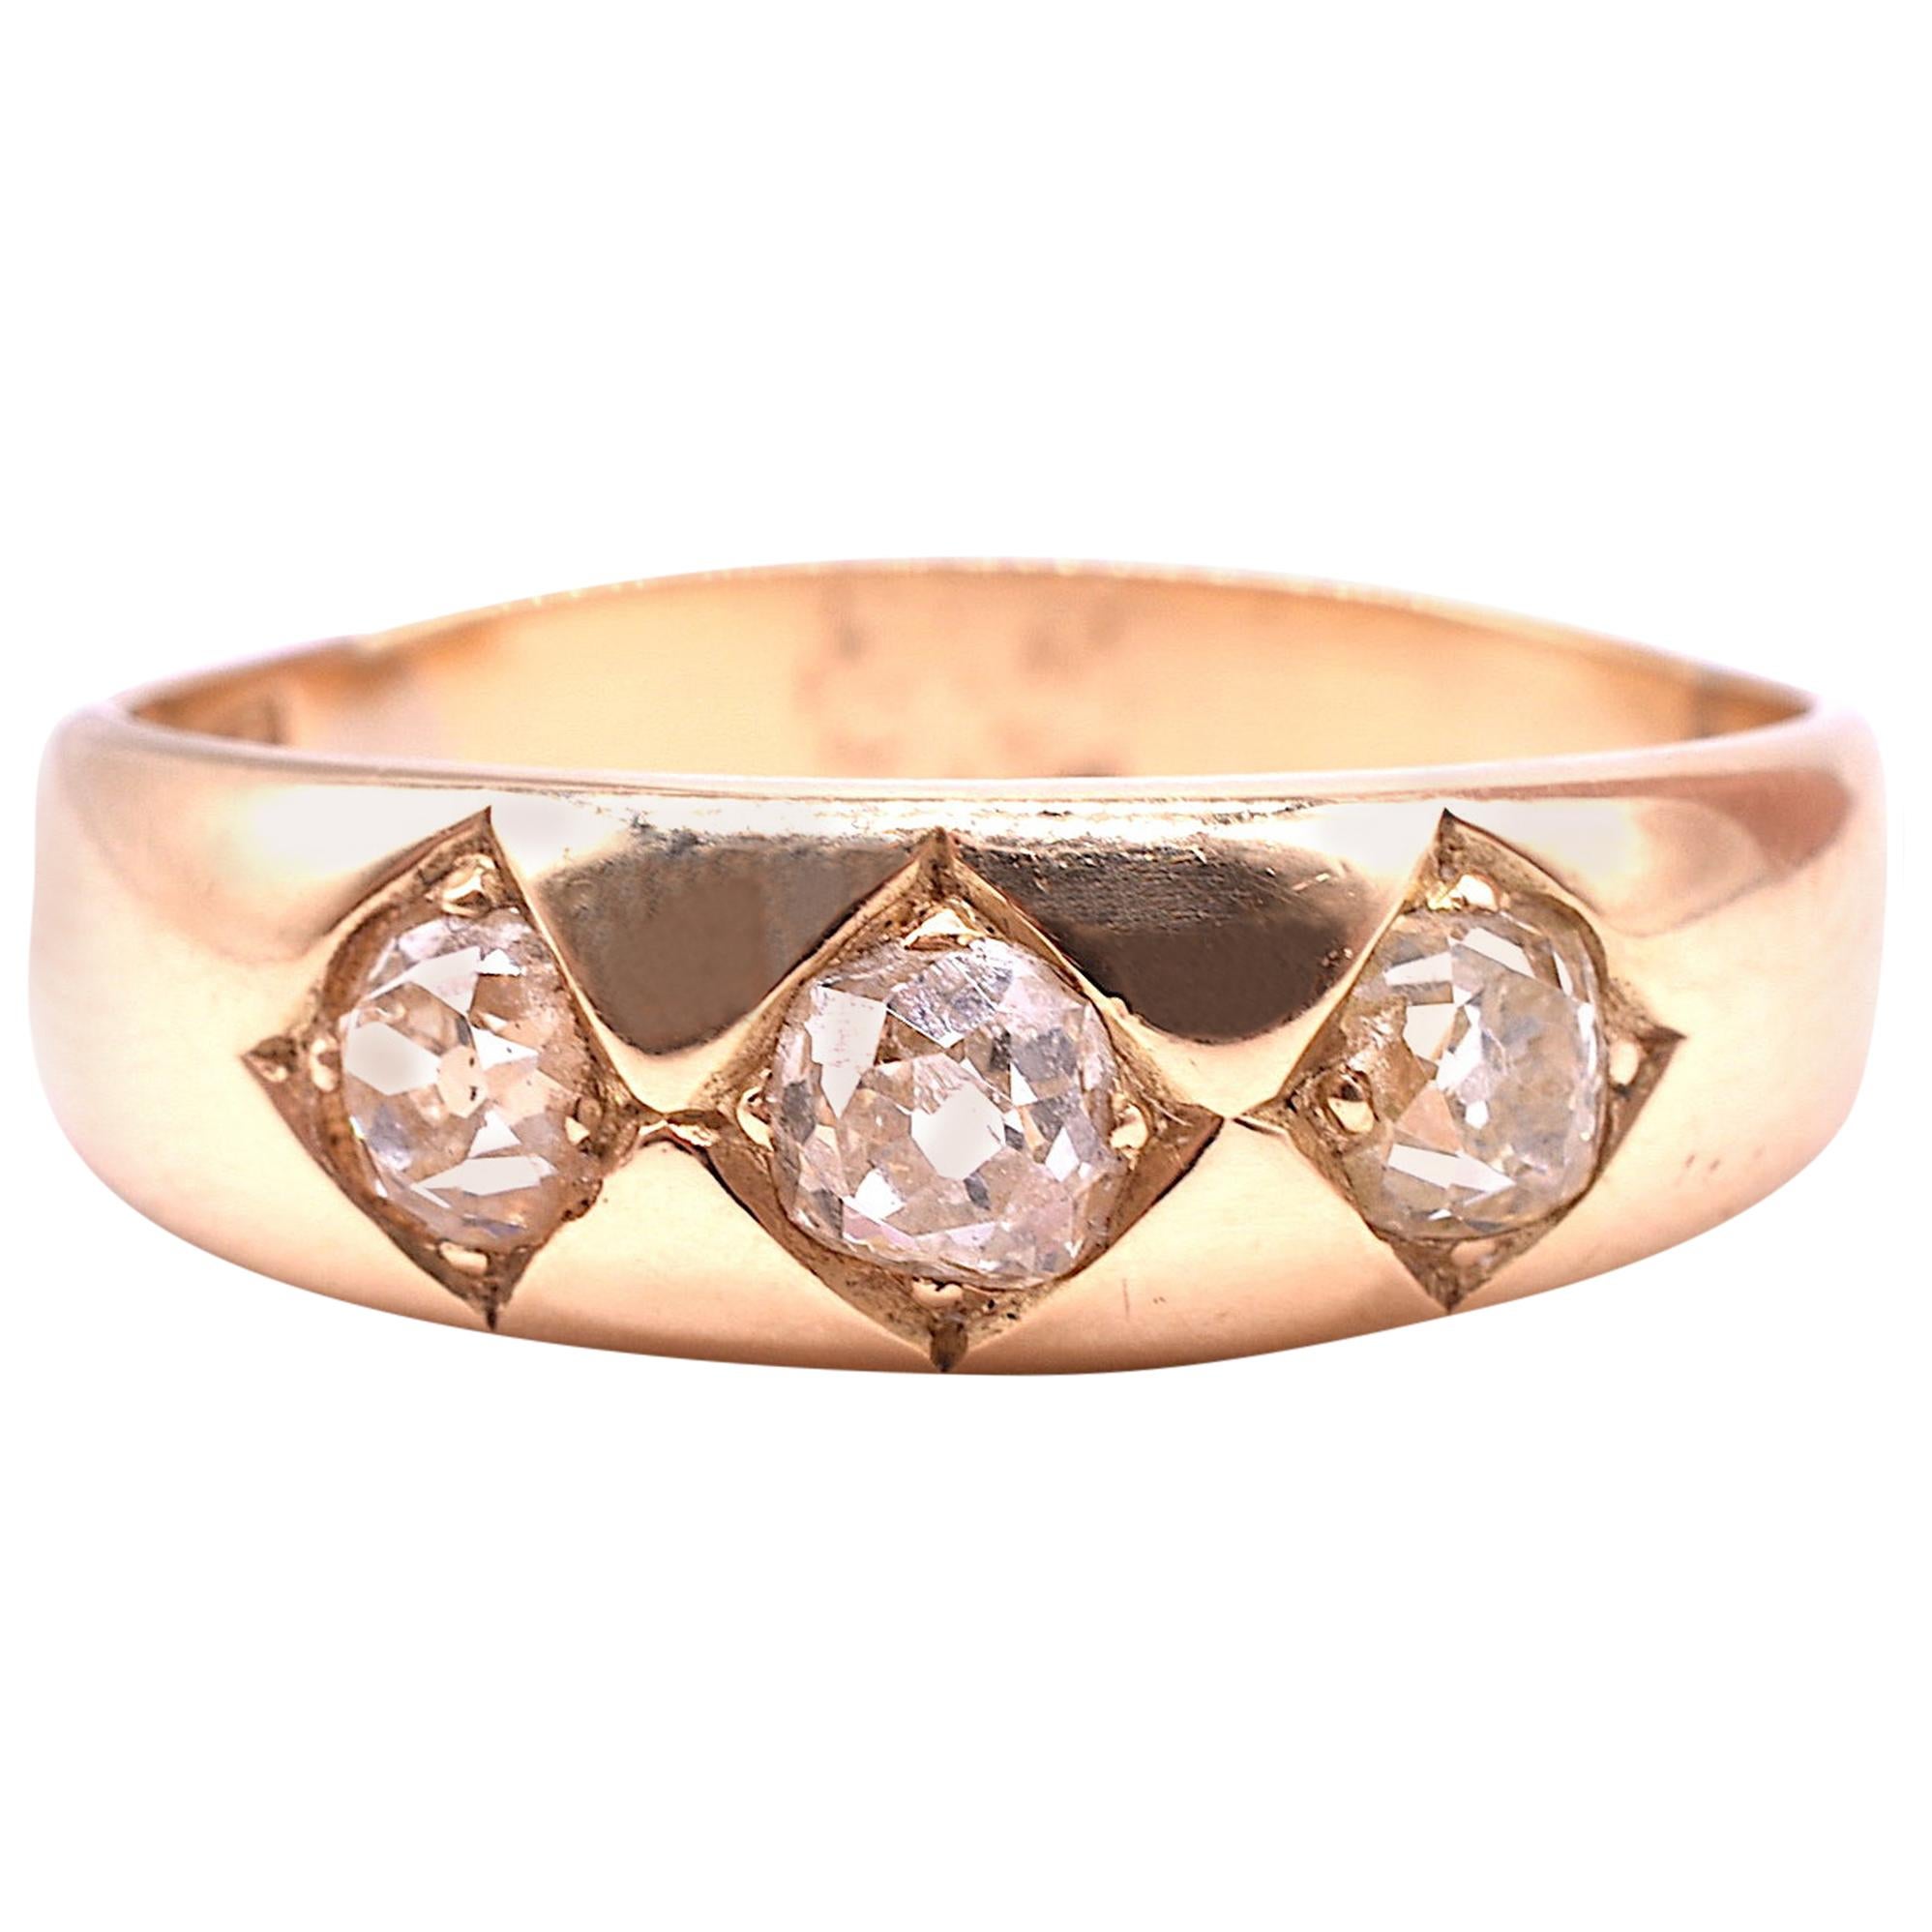 Antique Gypsy Ring with Three Diamonds